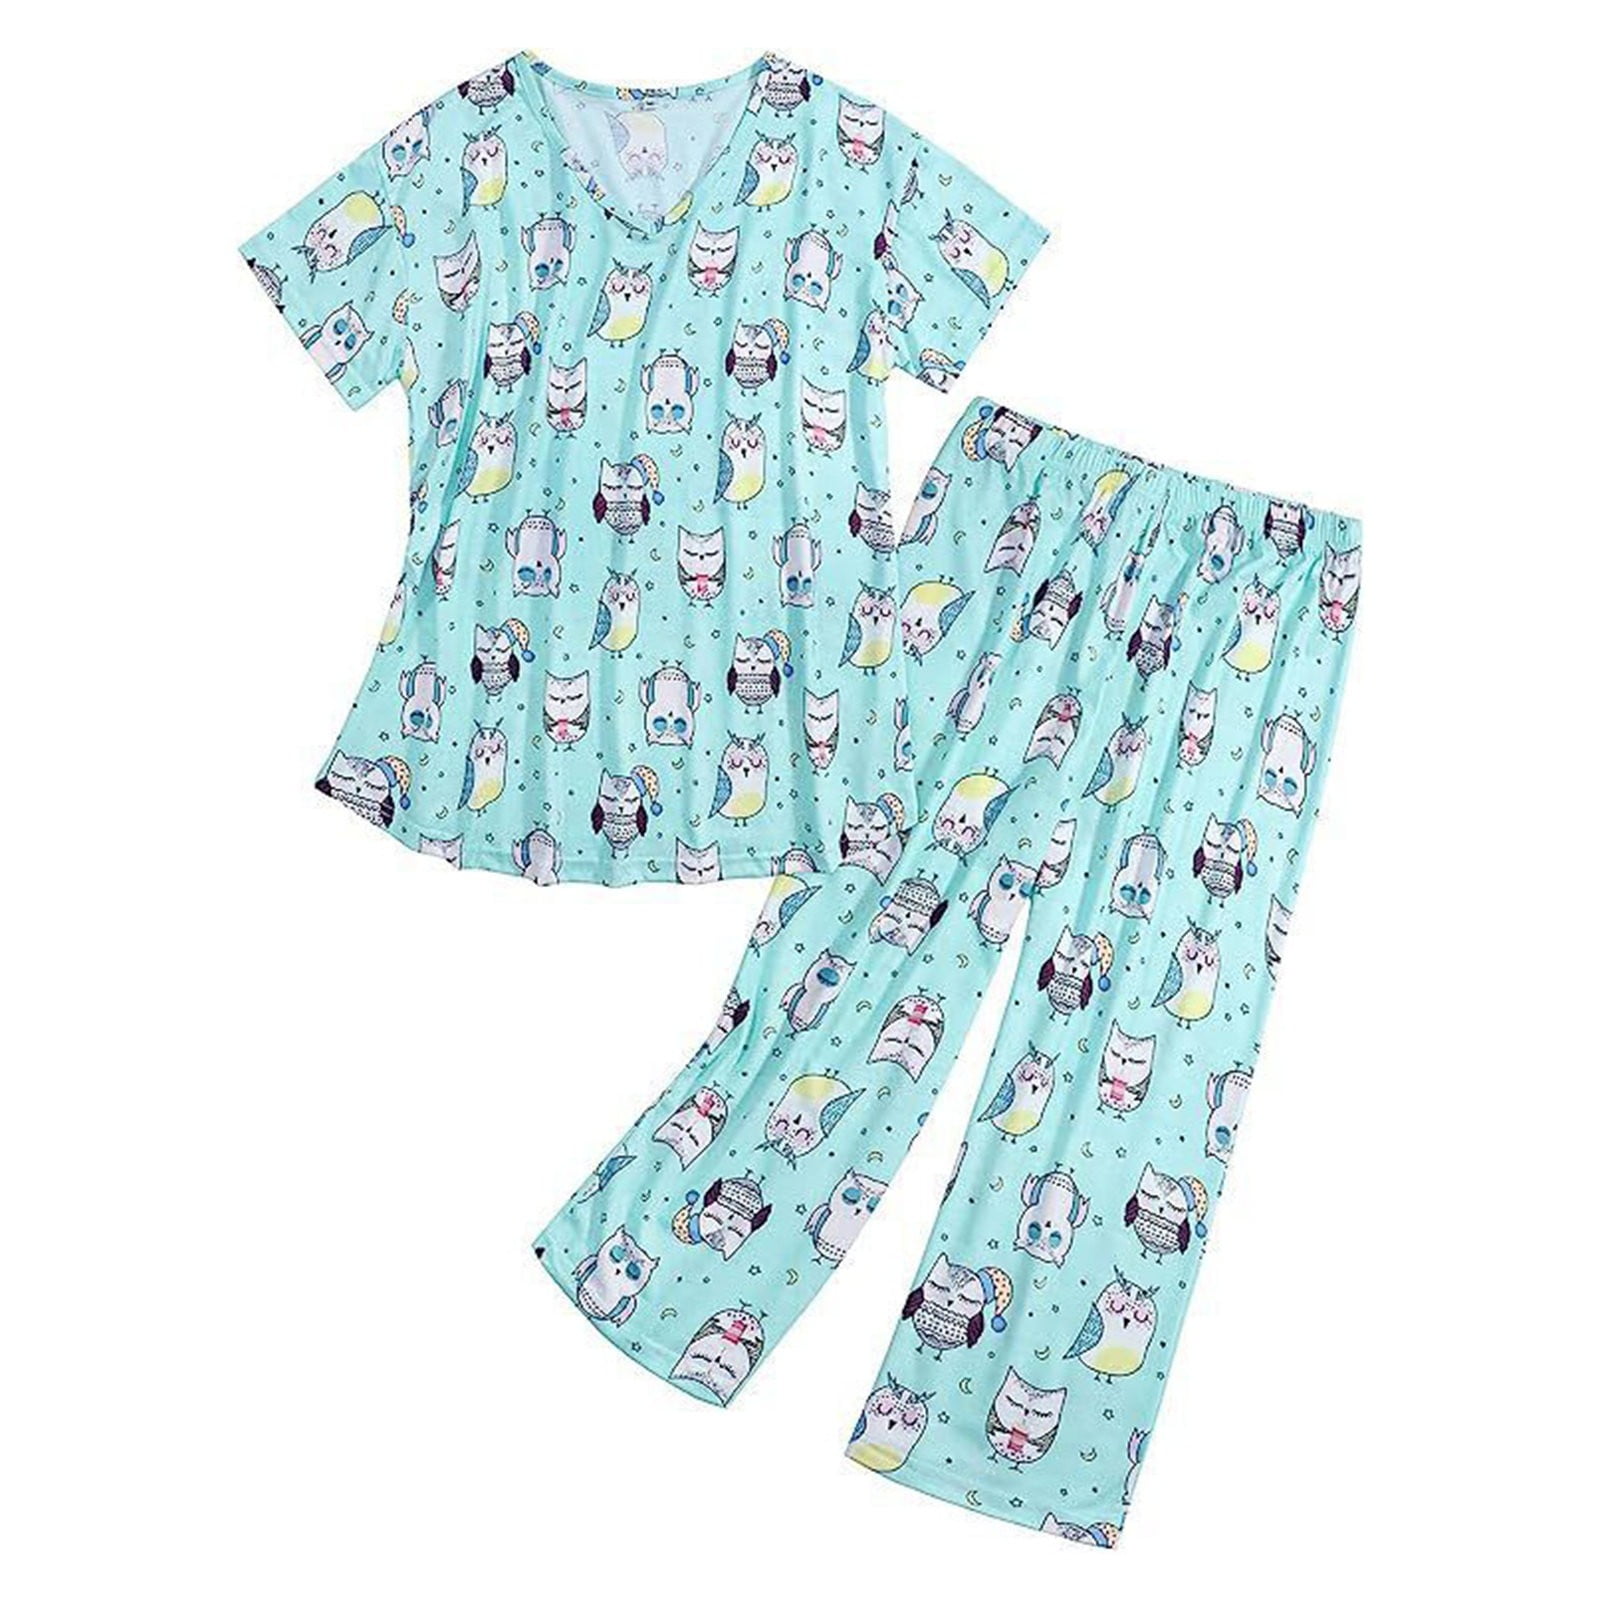 Baocc Pajamas for Women Women's Sleepwear Short Sleeve V Neck Top ...